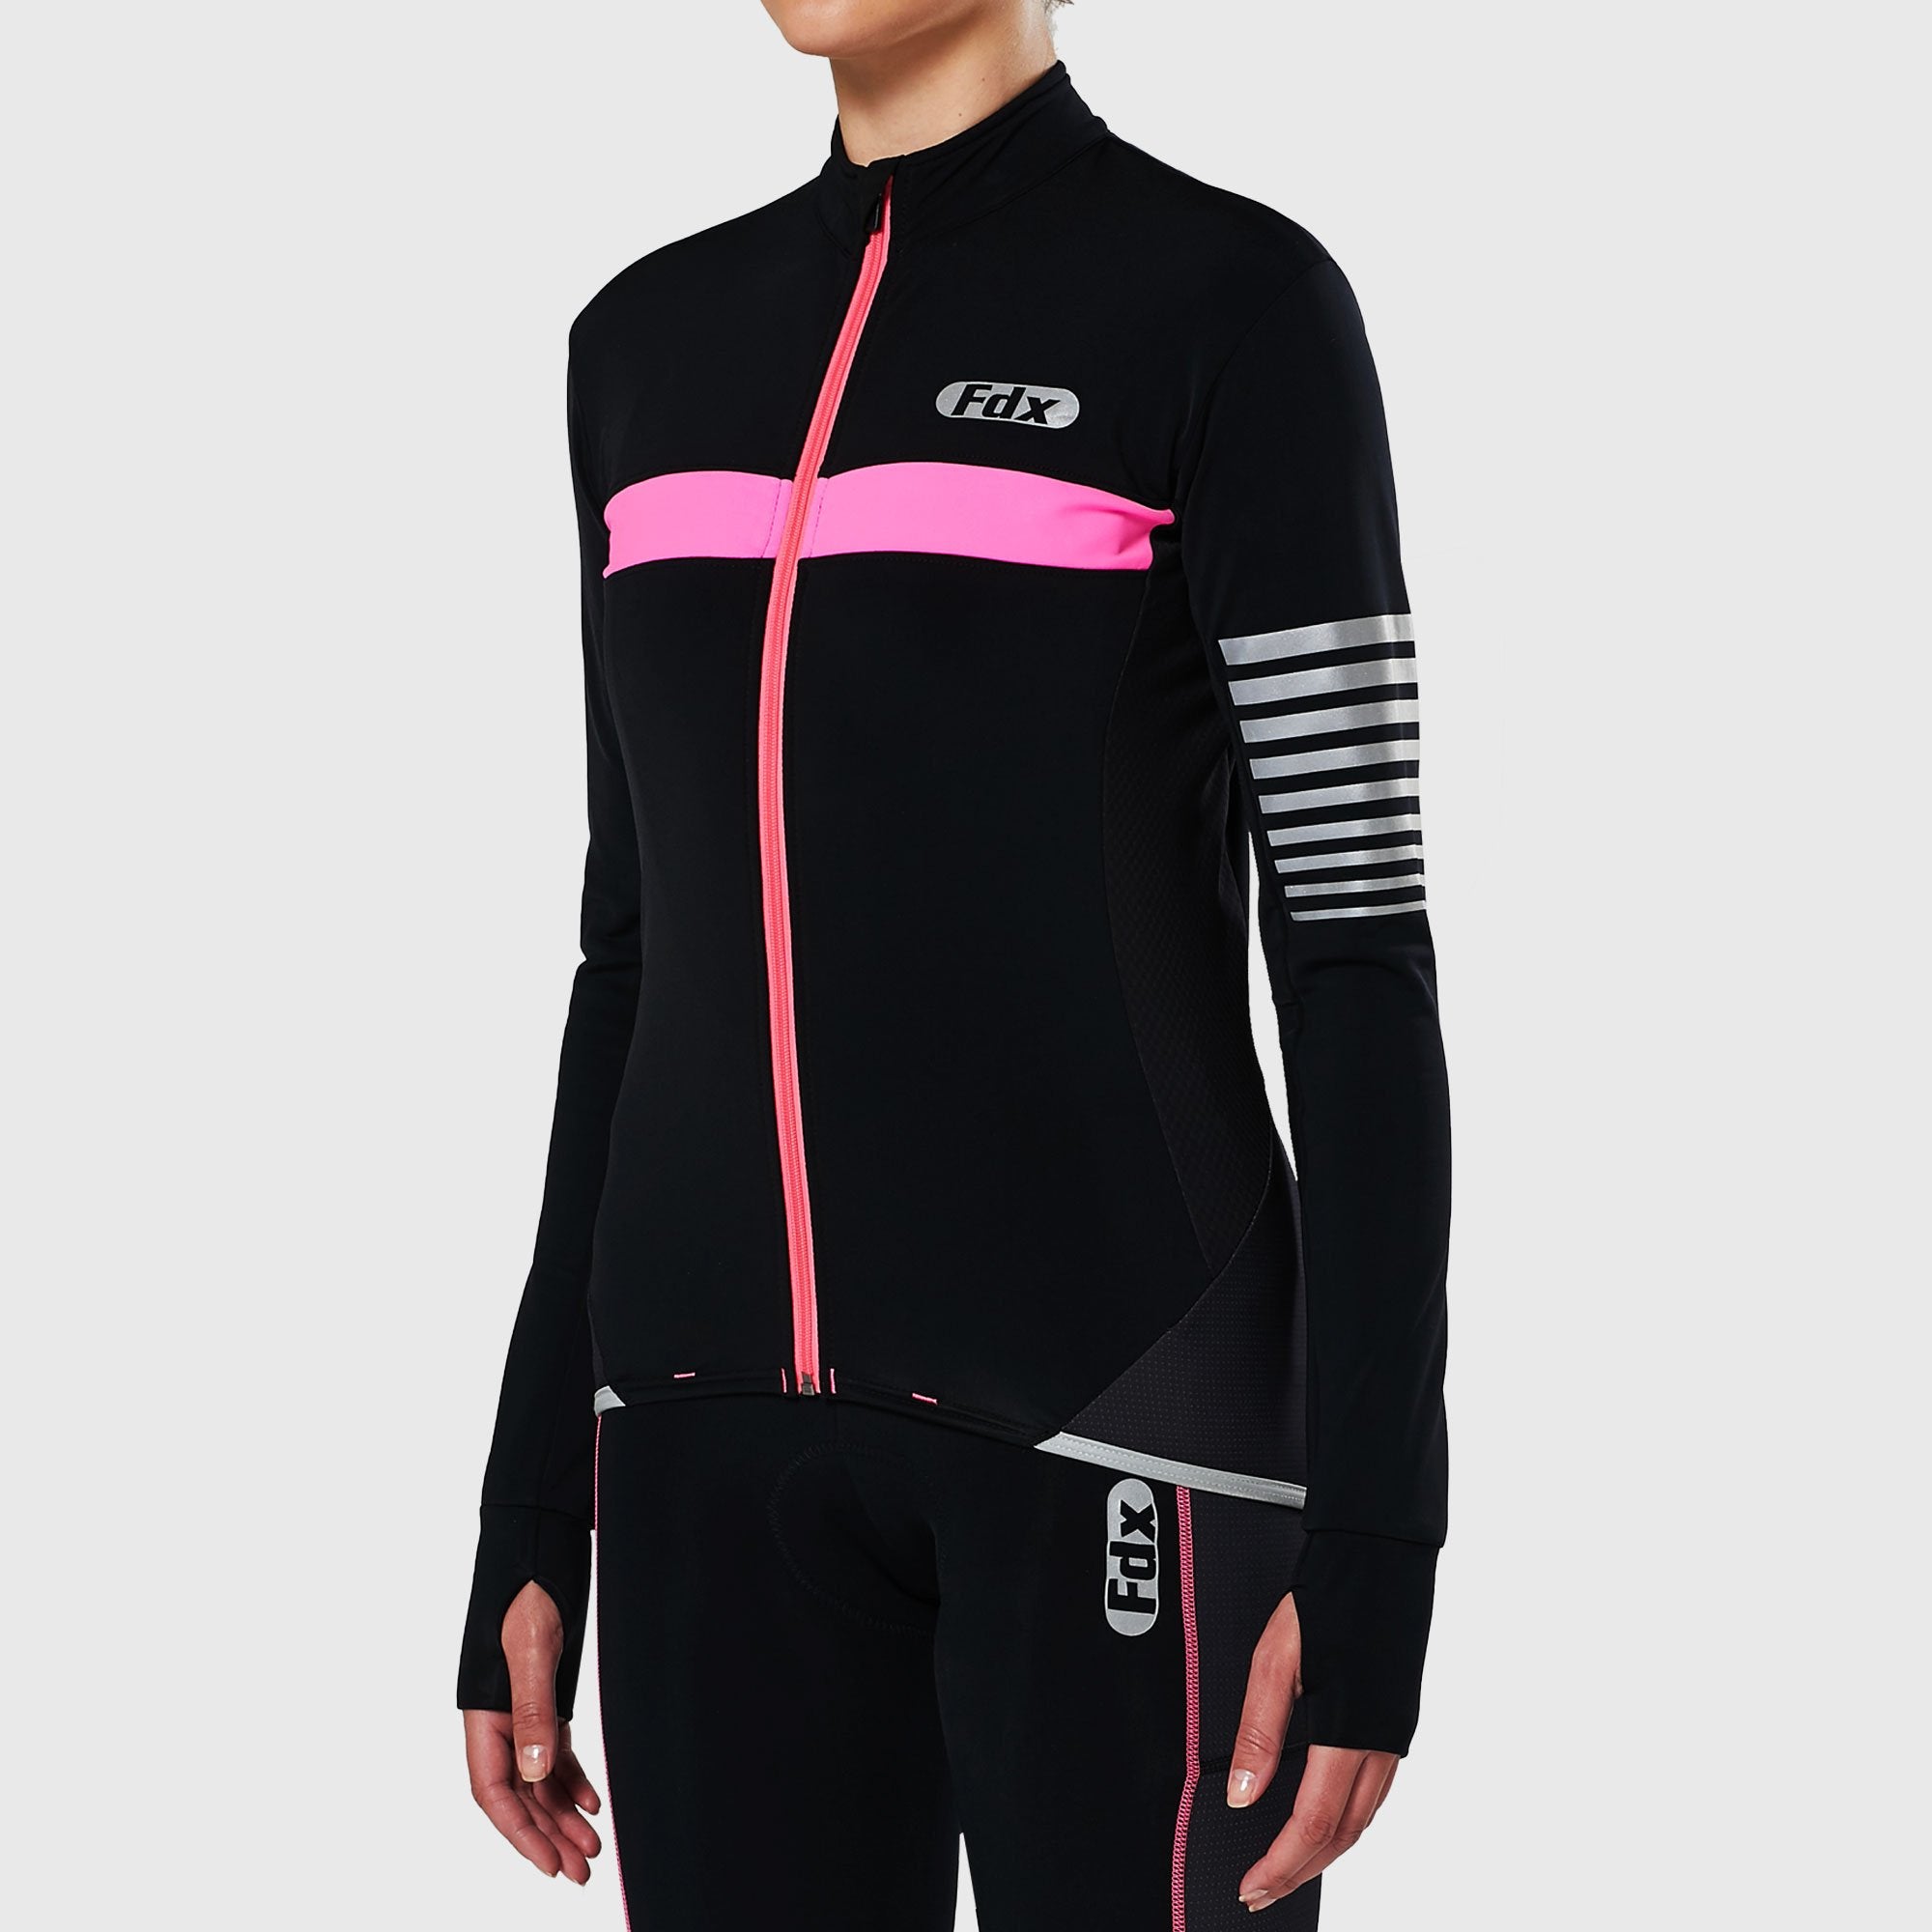 Fdx Best Women's Black & Pink Long Sleeve Cycling Jersey for Winter Roubaix Thermal Fleece Shirt Road Bike Wear Top Full Zipper, Lightweight  Pockets & Hi viz Reflectors - All Day